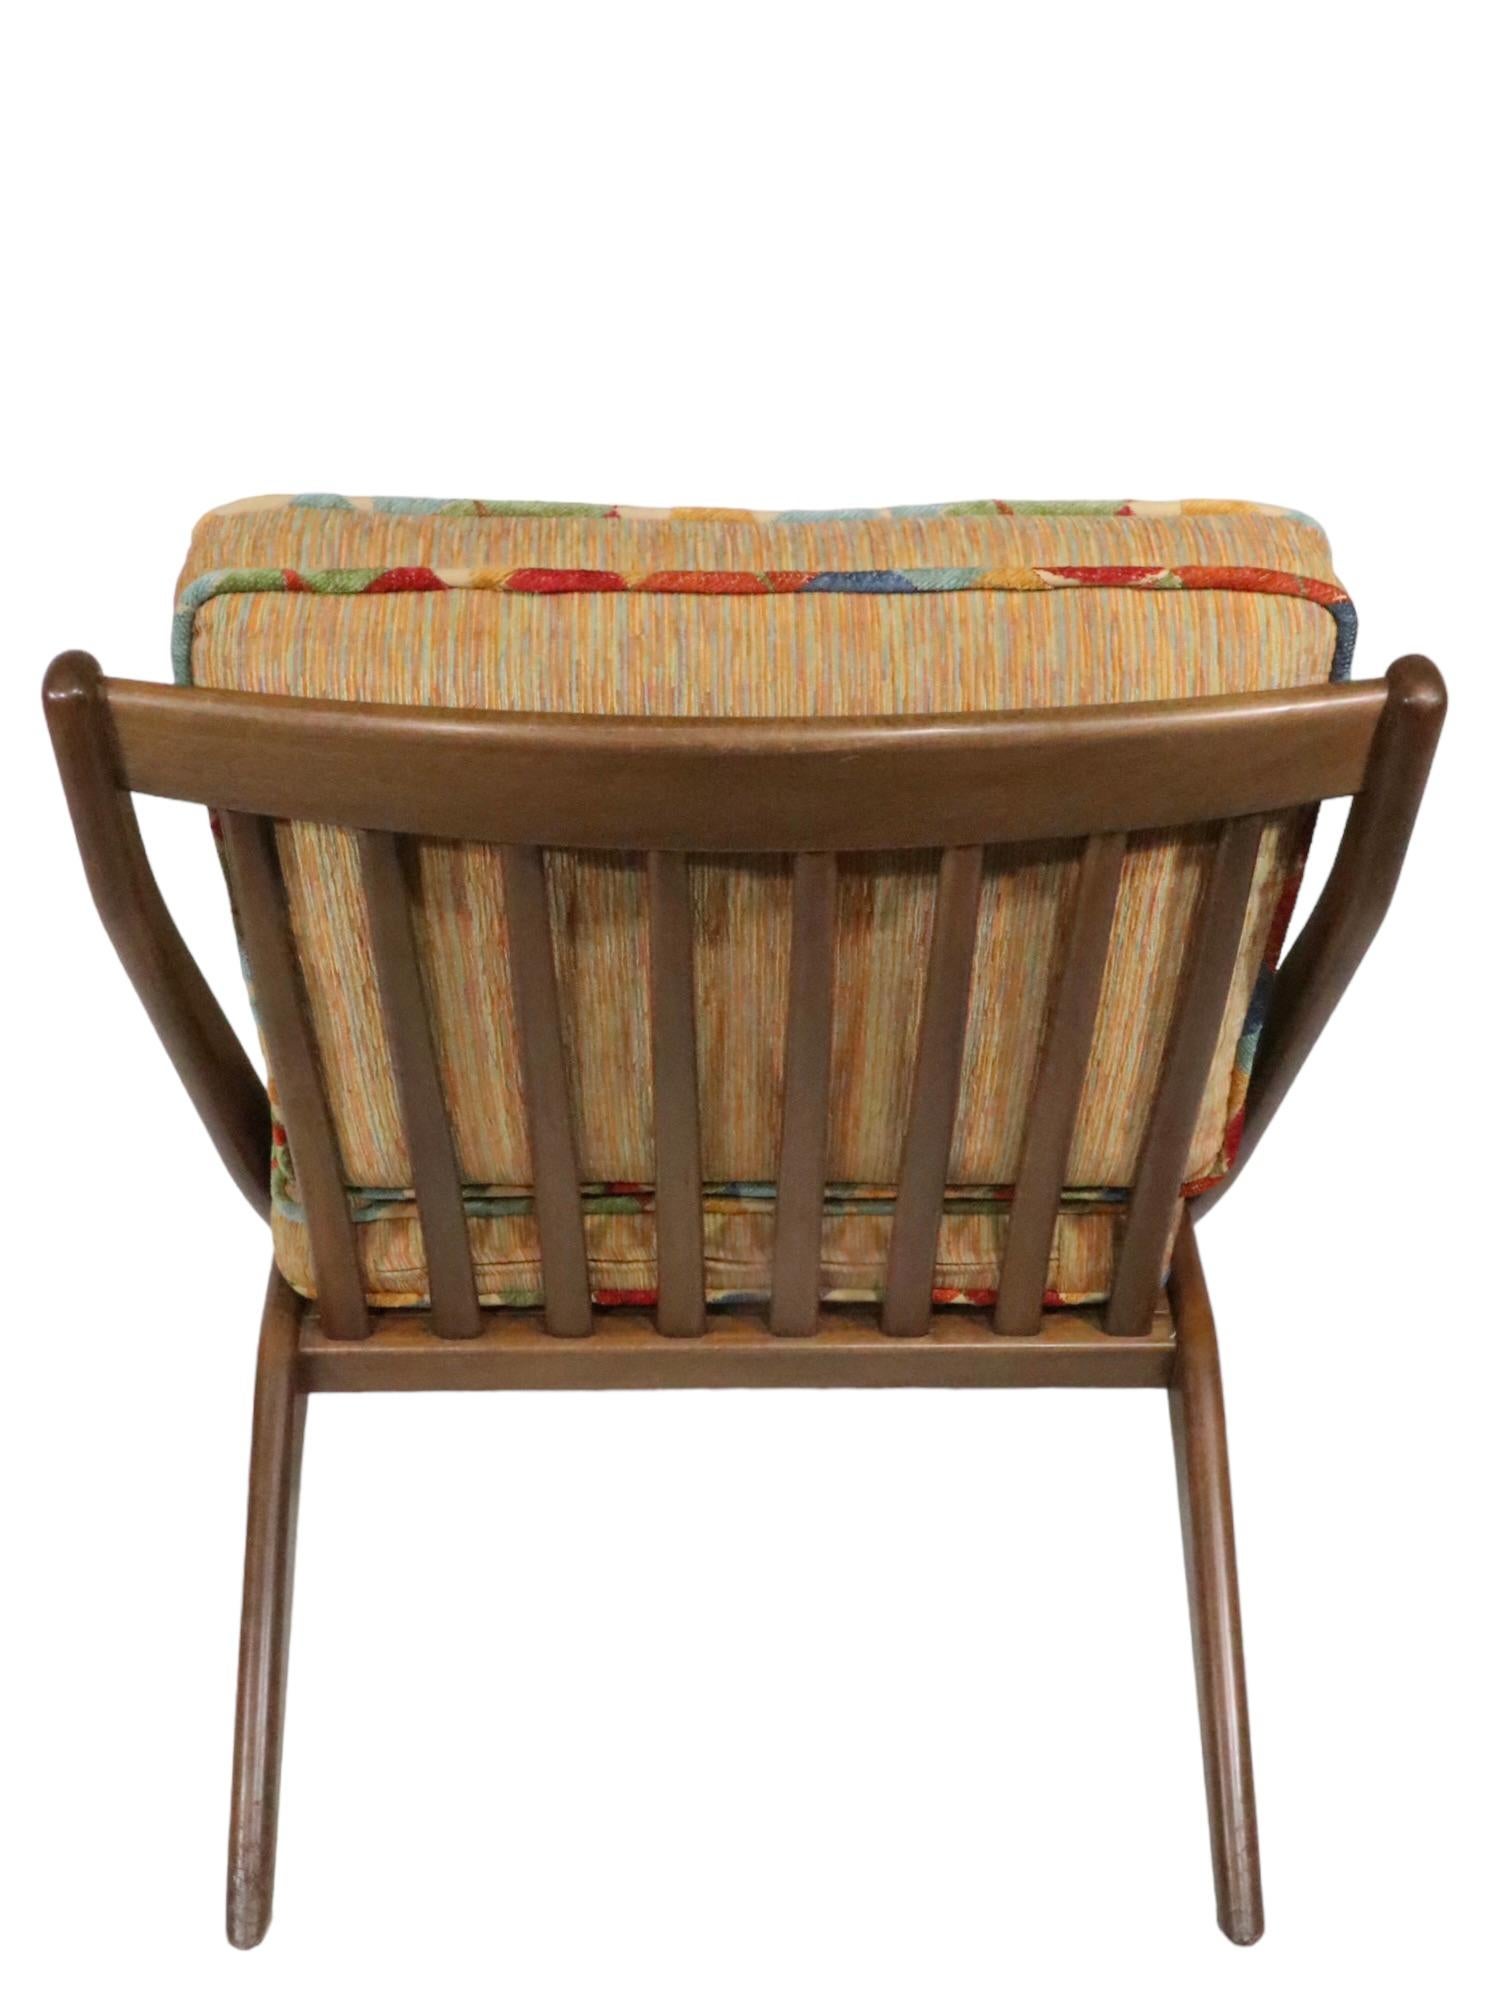 Upholstery  Mid Century Folke Ohlsson for DUX  Scissor Chair Made in Sweden c 1960's  For Sale